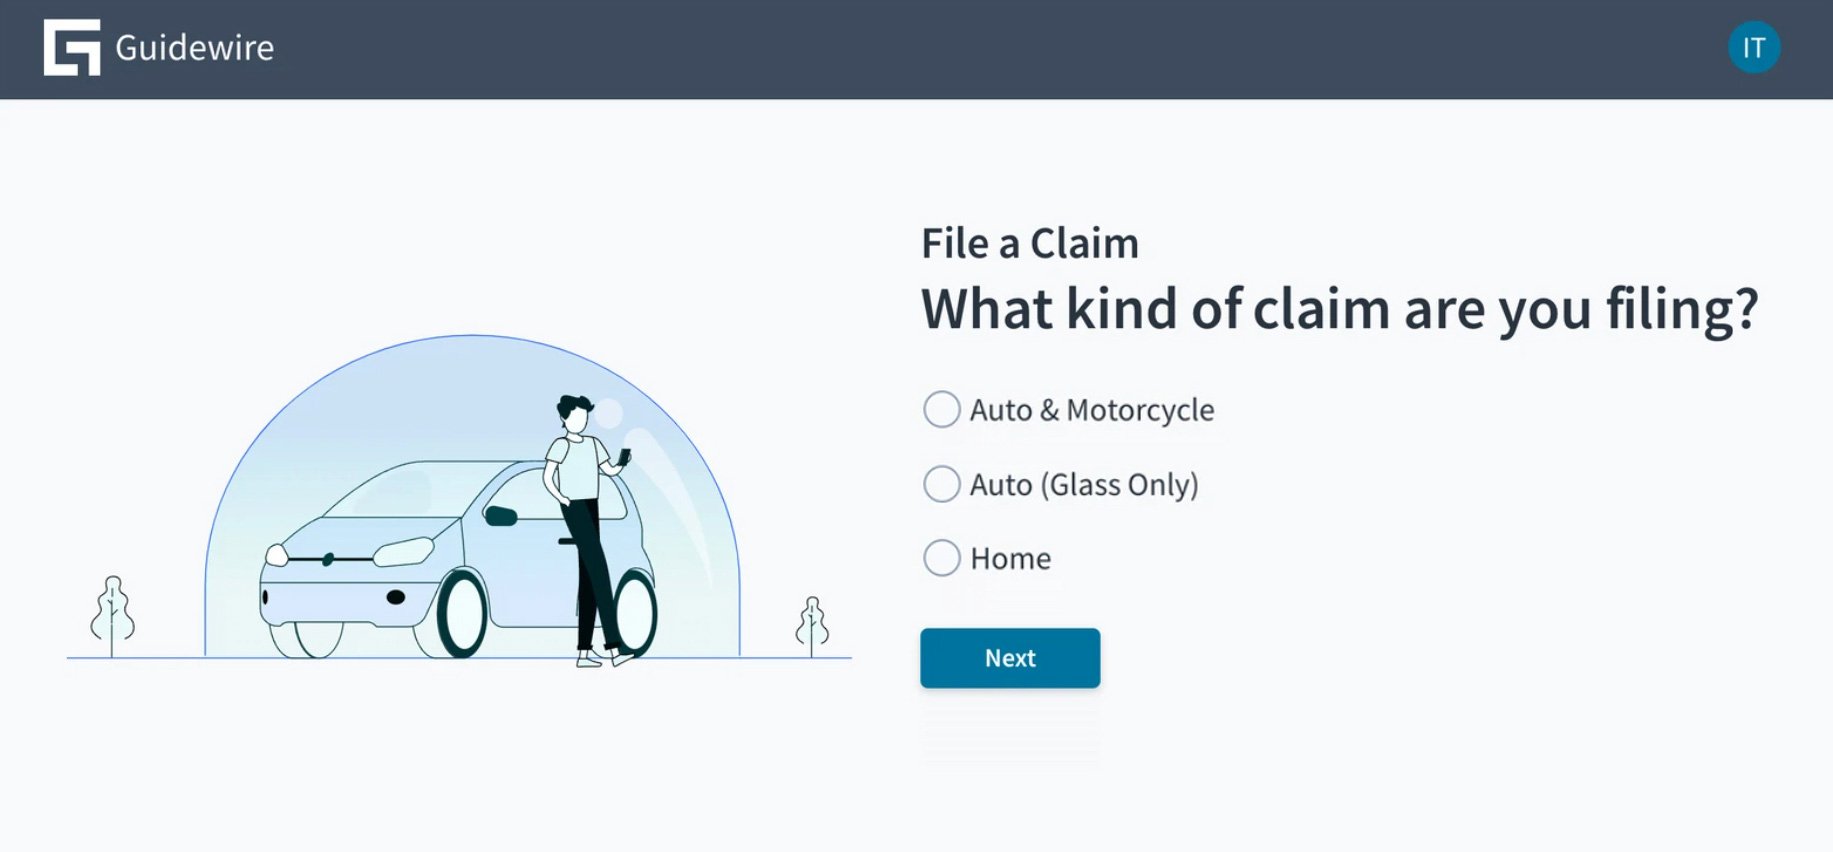 File a claim screen